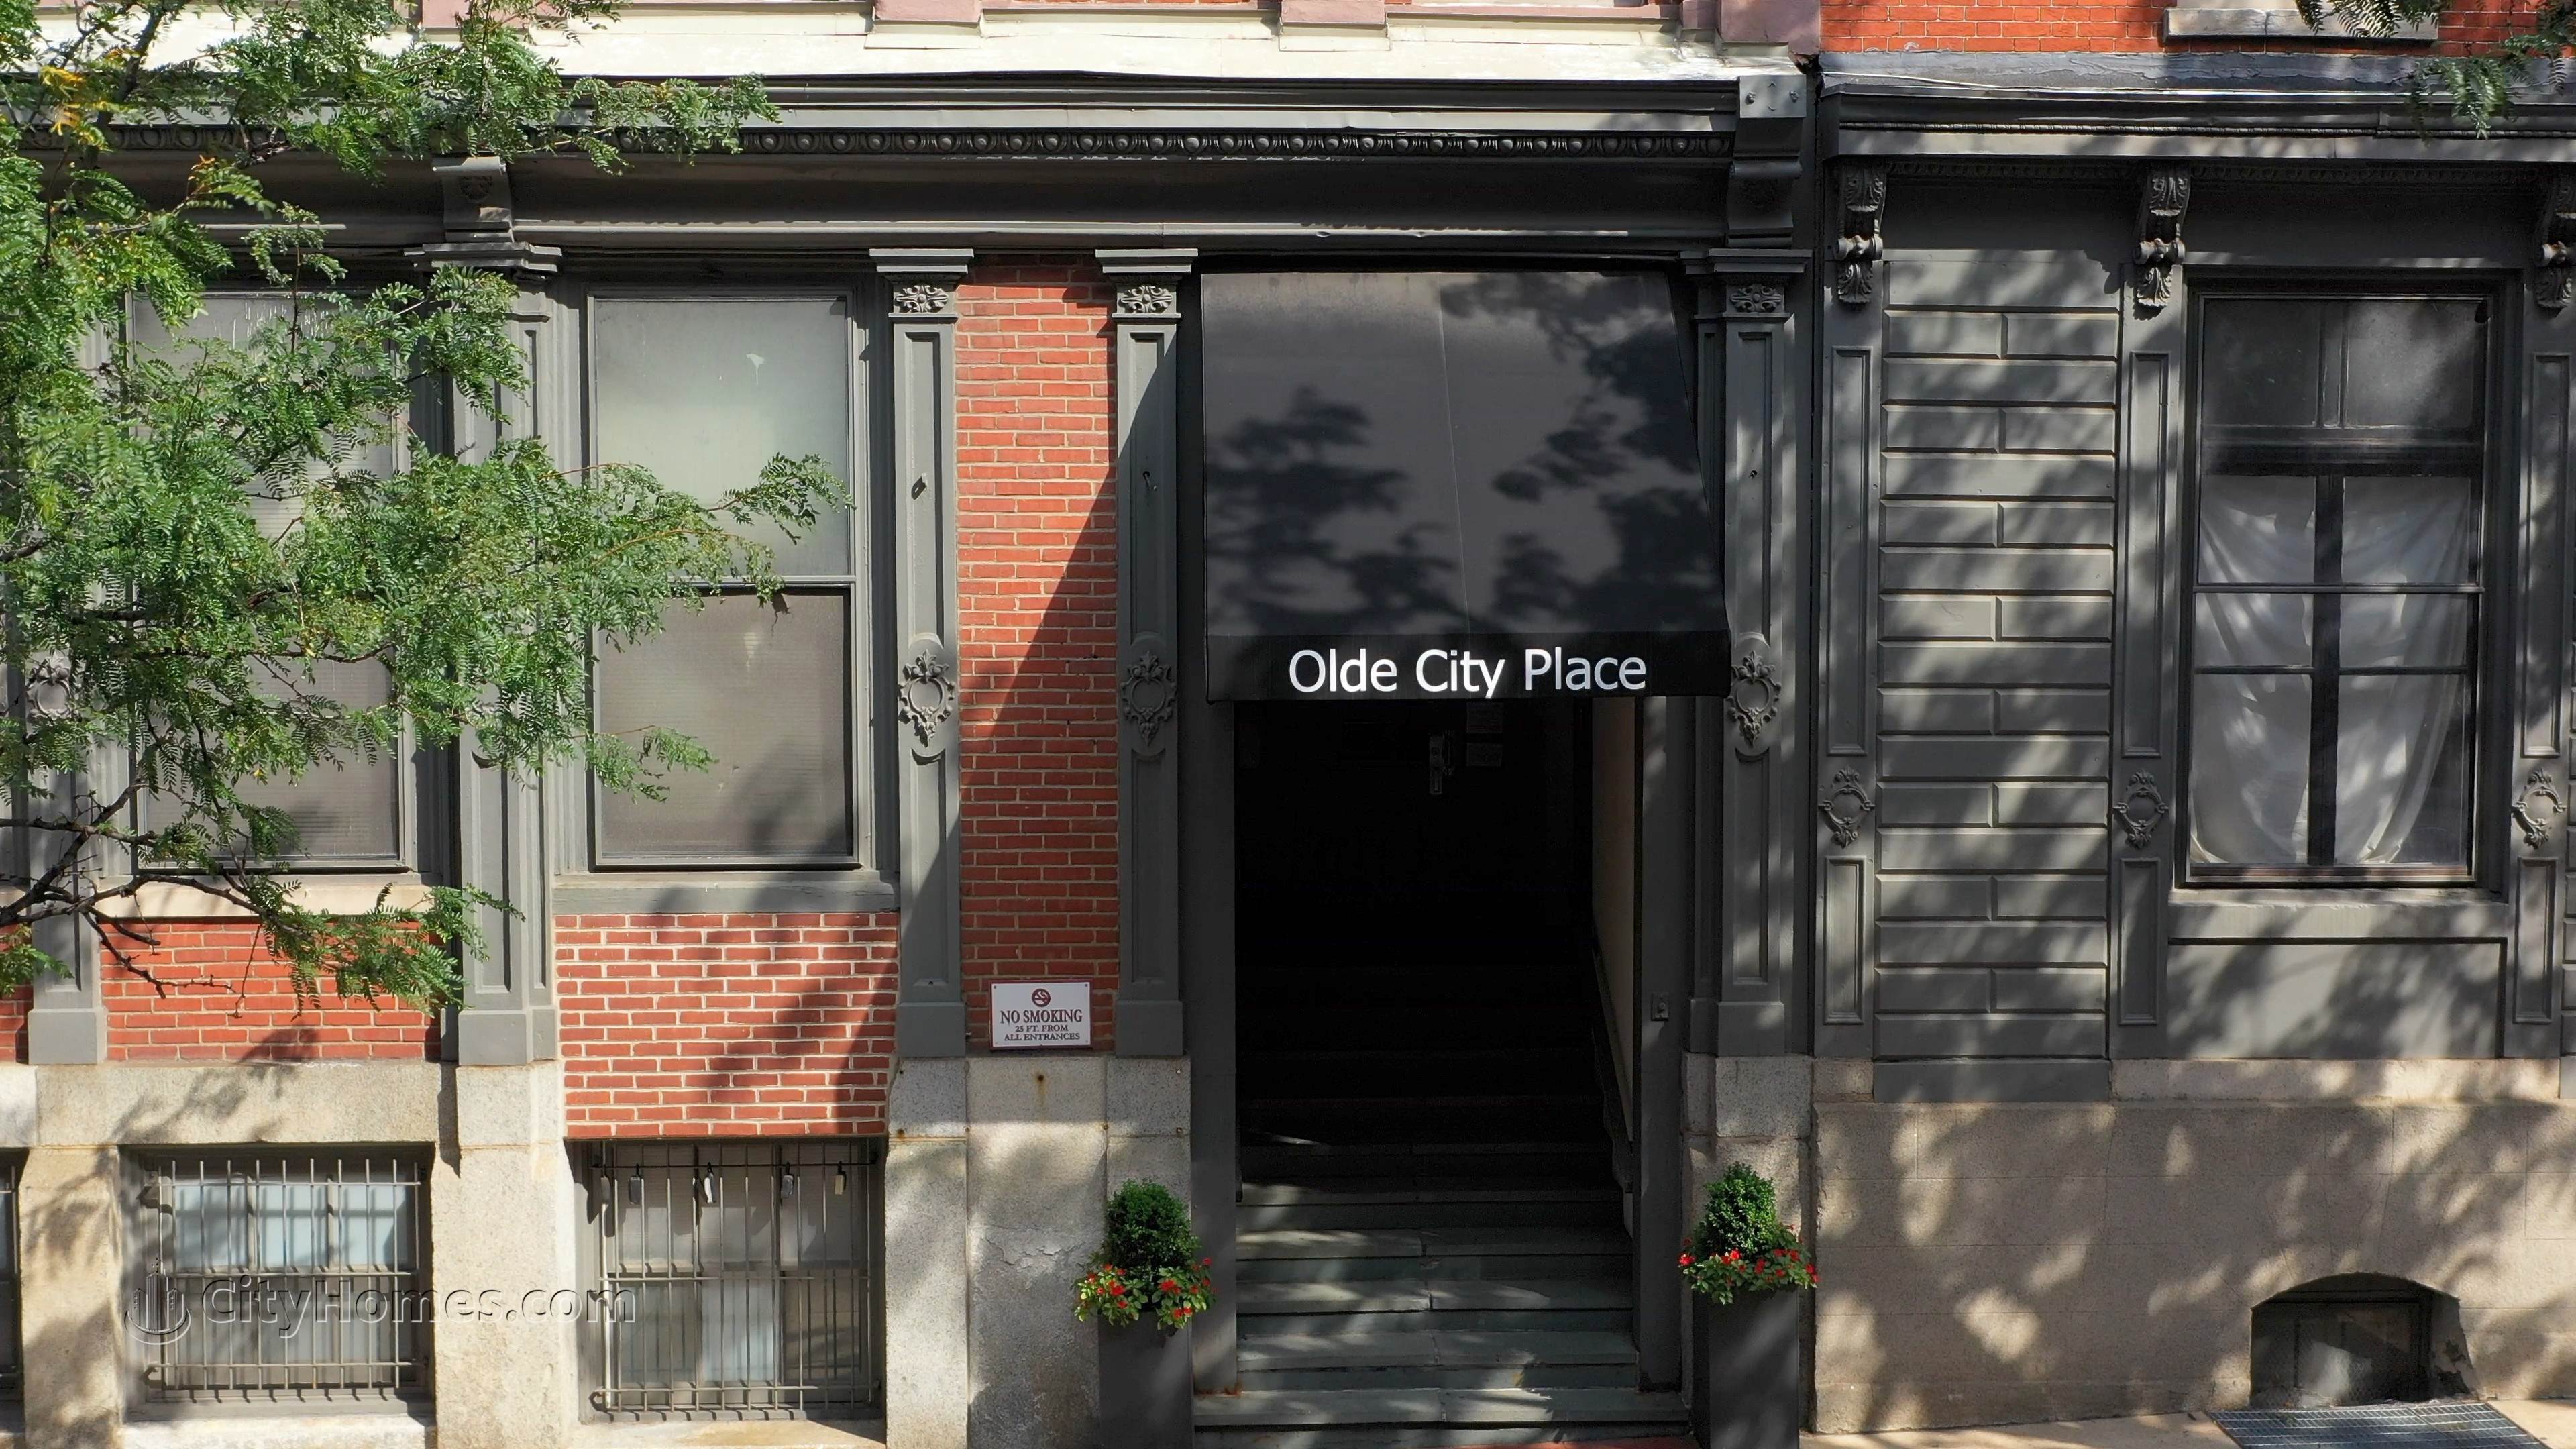 Olde City Place edificio en 205-11 N 4th St, Old City, Philadelphia, PA 19106